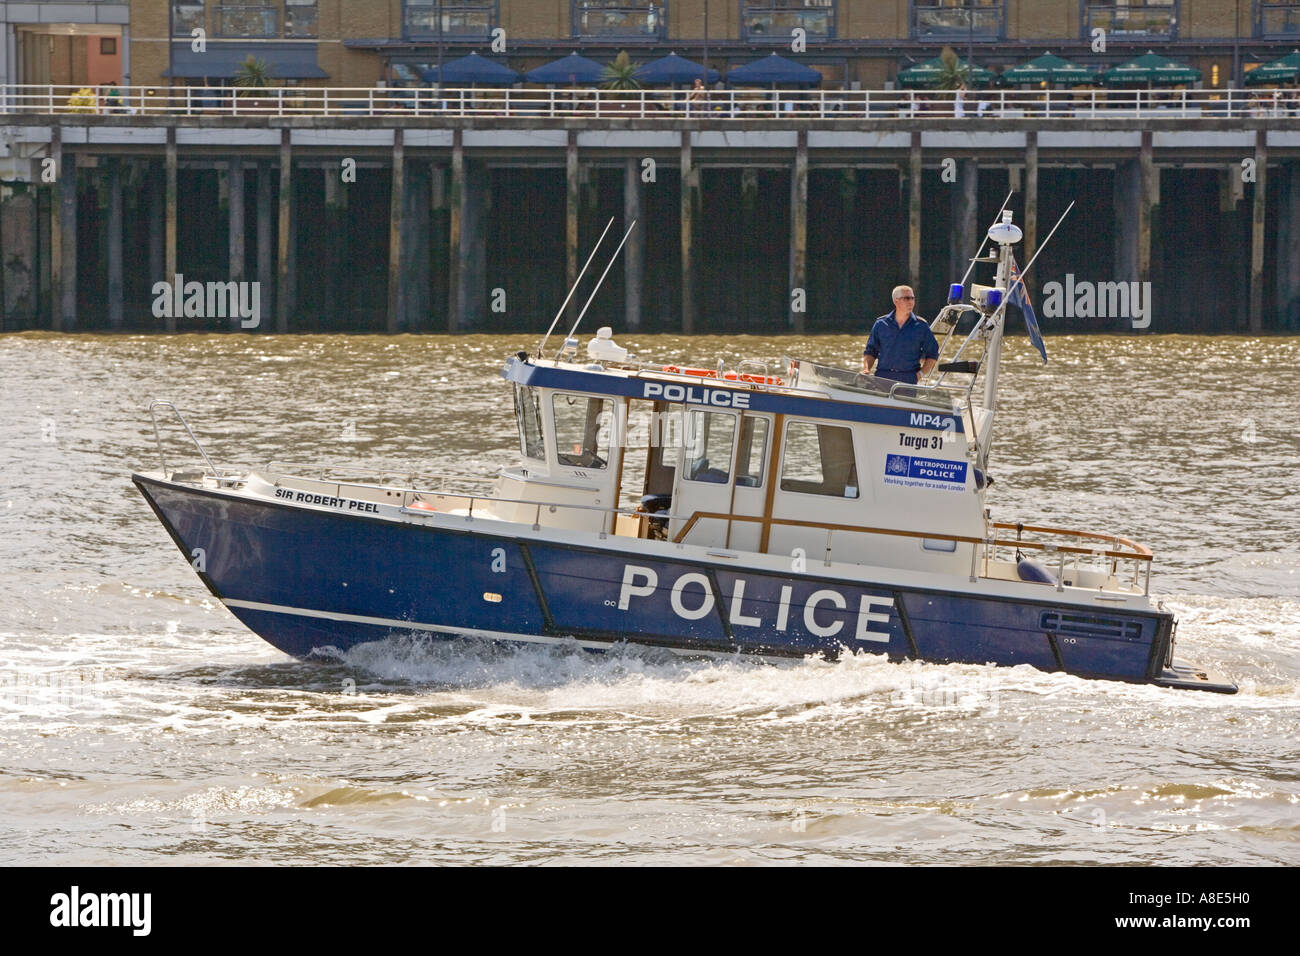 Police Patrol Boat "Sir Robert Peel" on the Thames Stock Photo